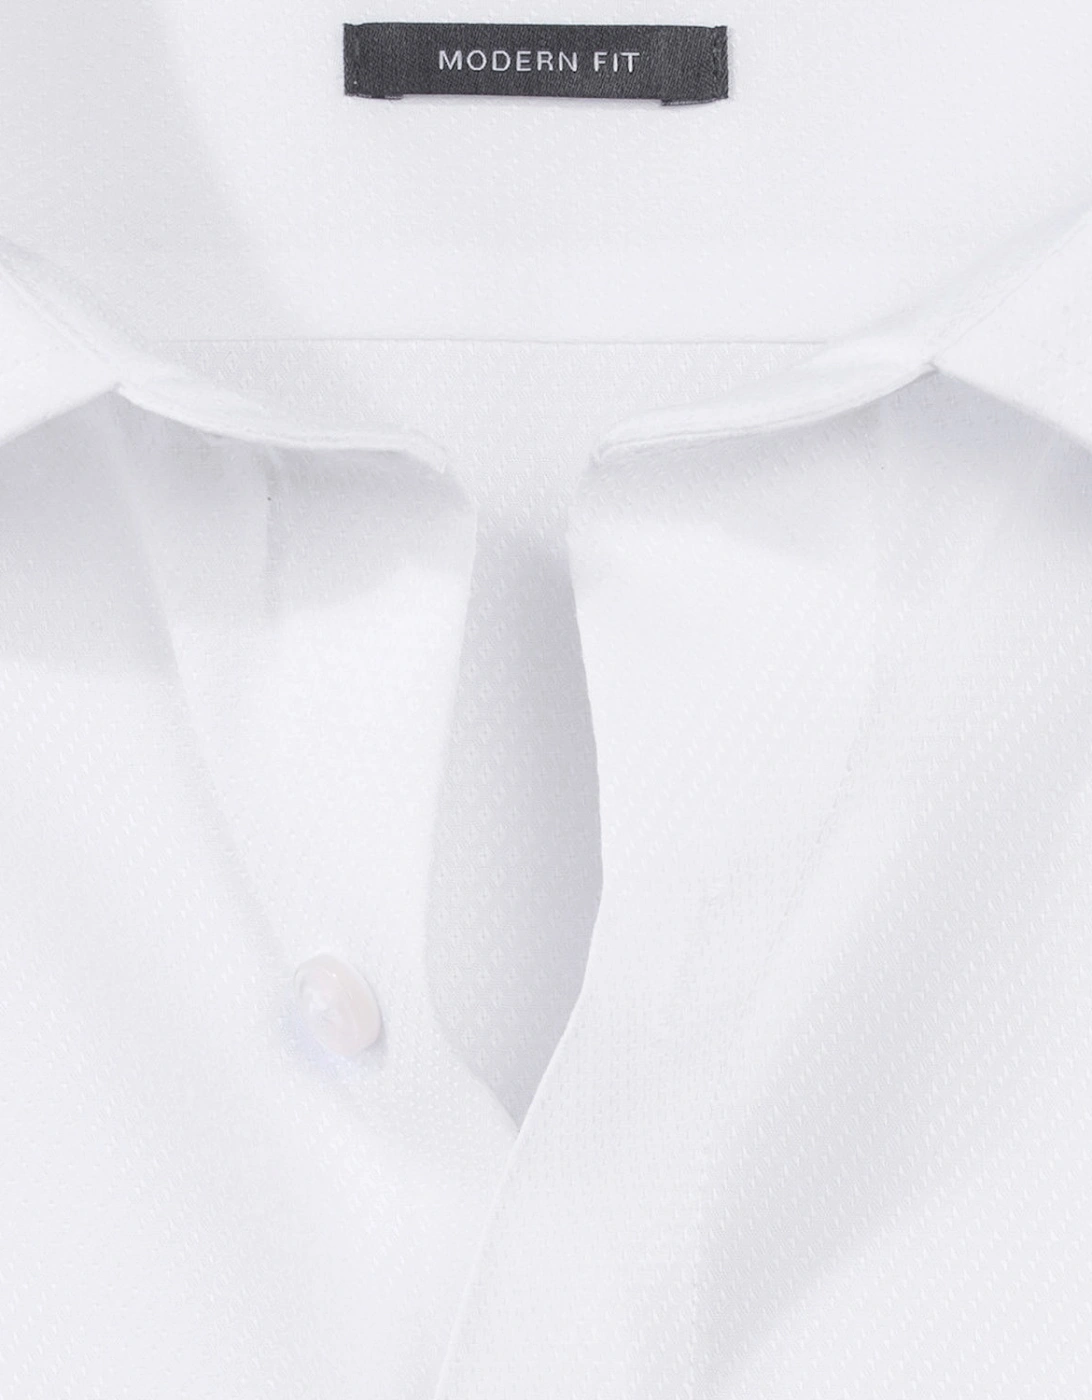 Mens Iridescent Pattern Business Shirt (White)